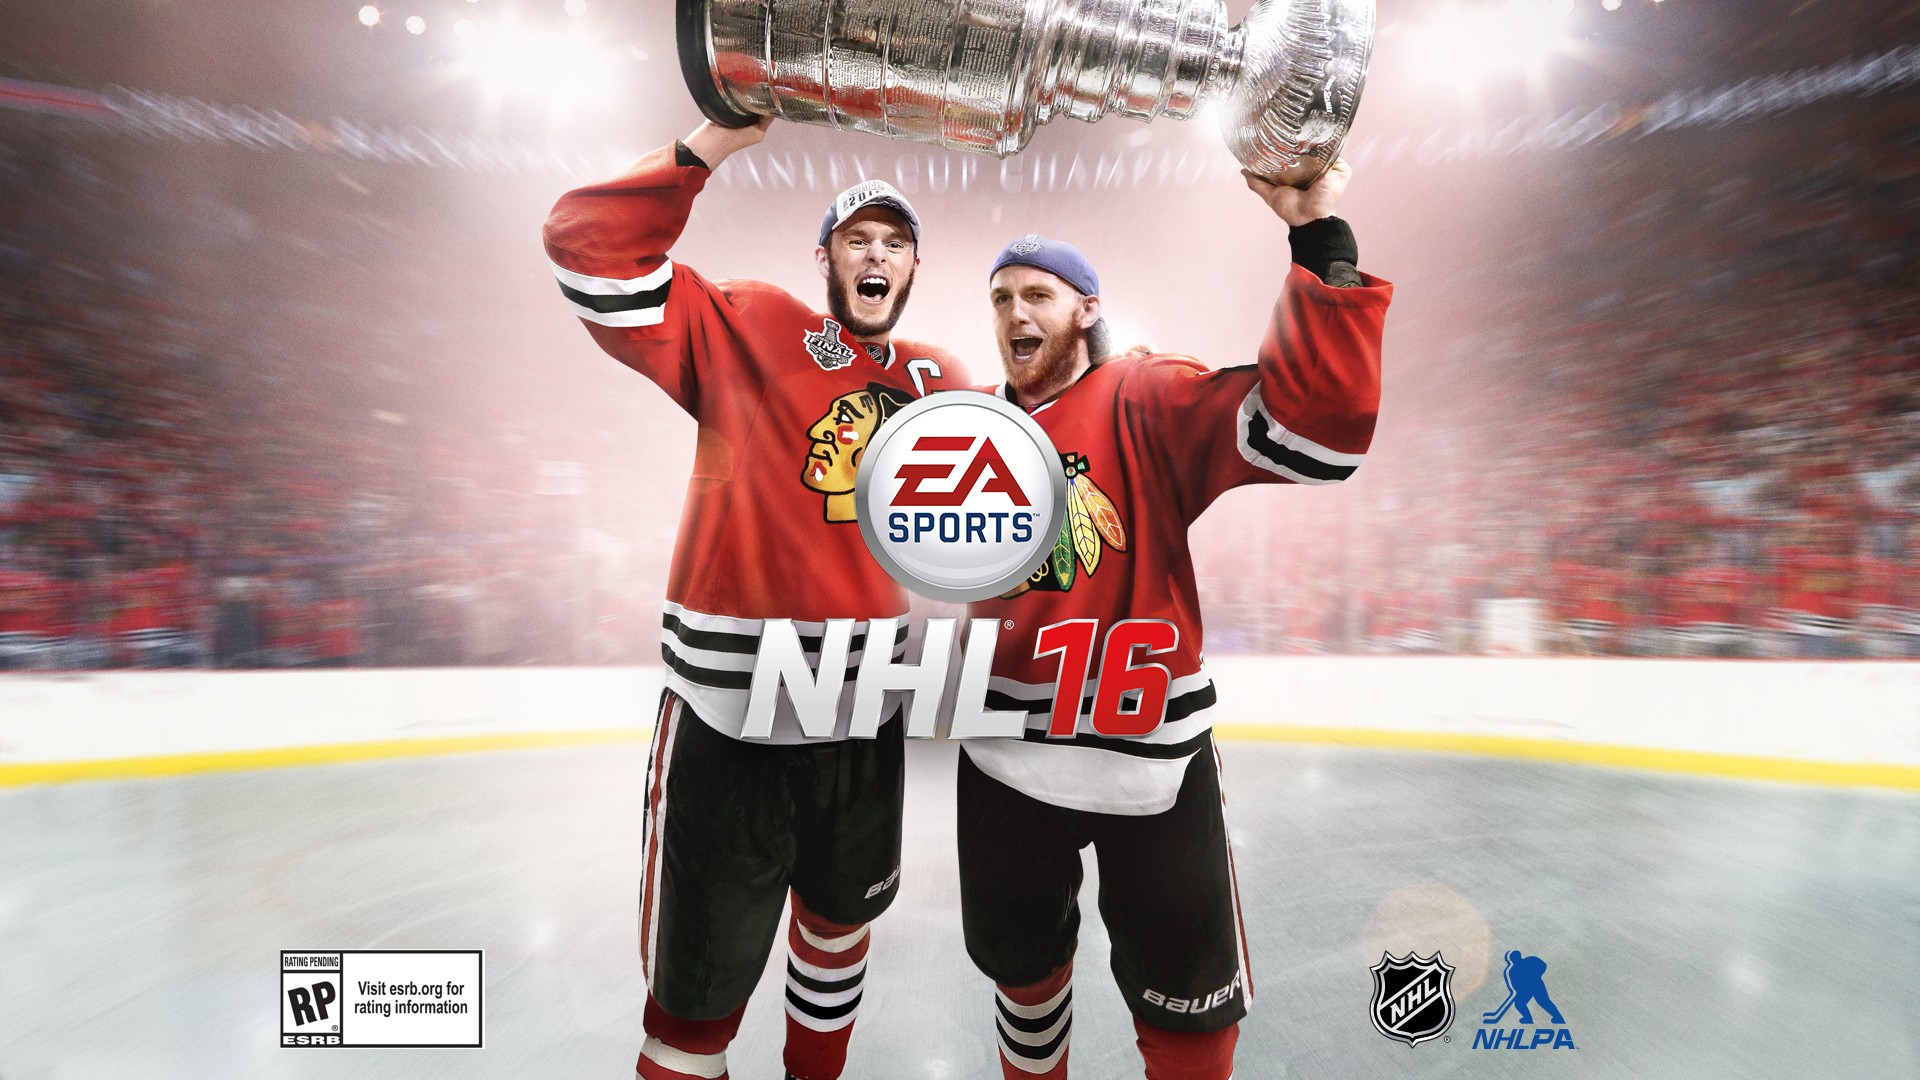 NHL 16 EA SPORTS Hockey League Beta Begins July 30th